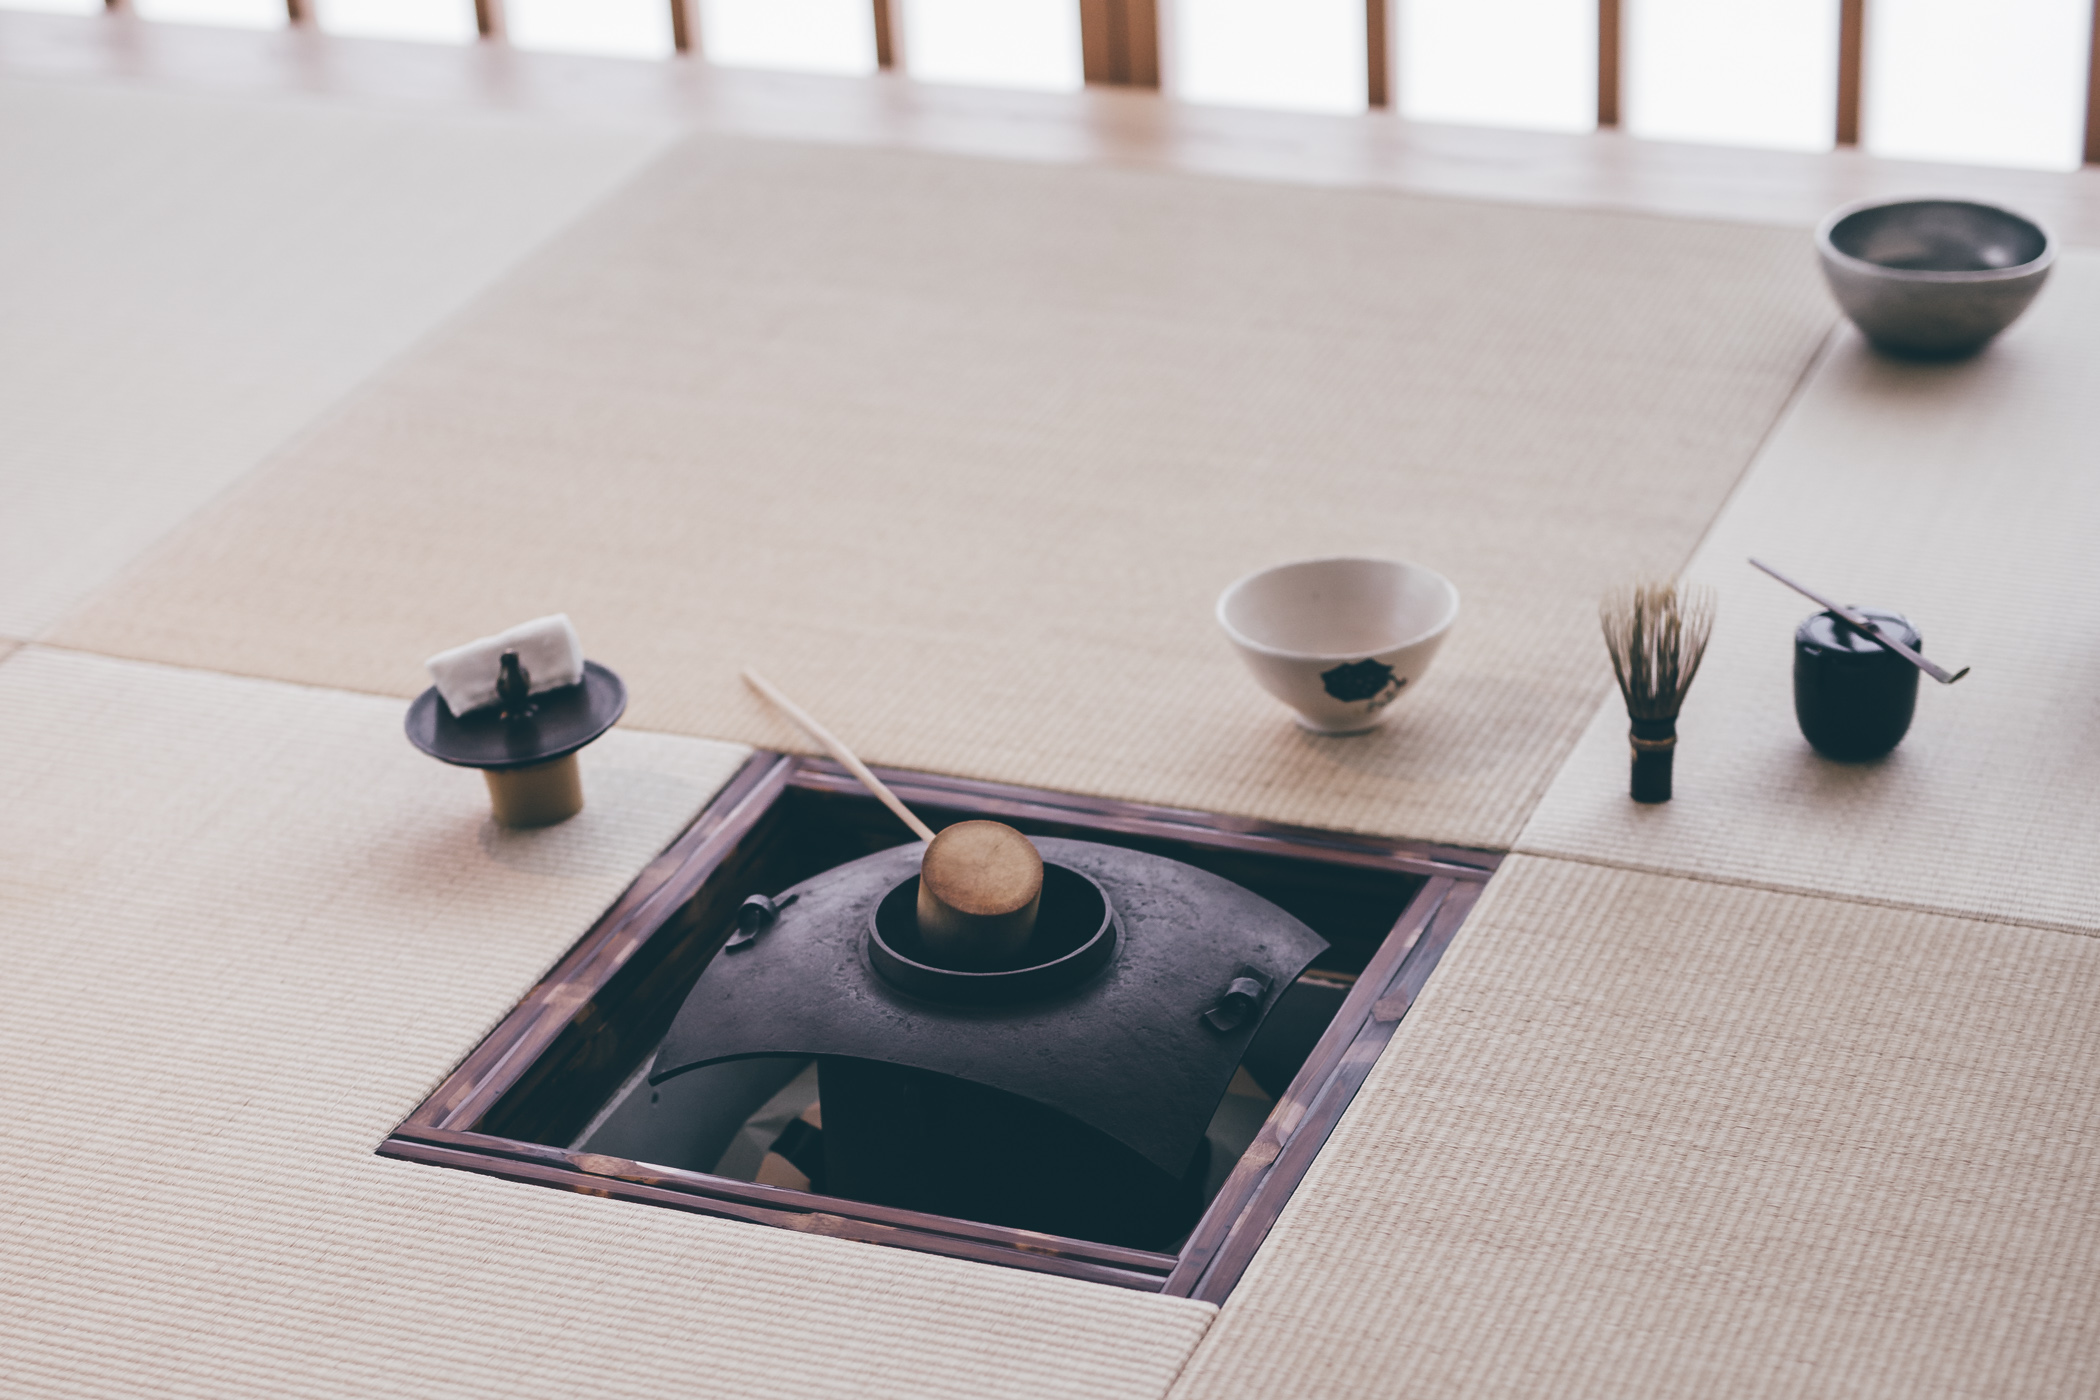 Hoshinoya Tokyo tea ceremony